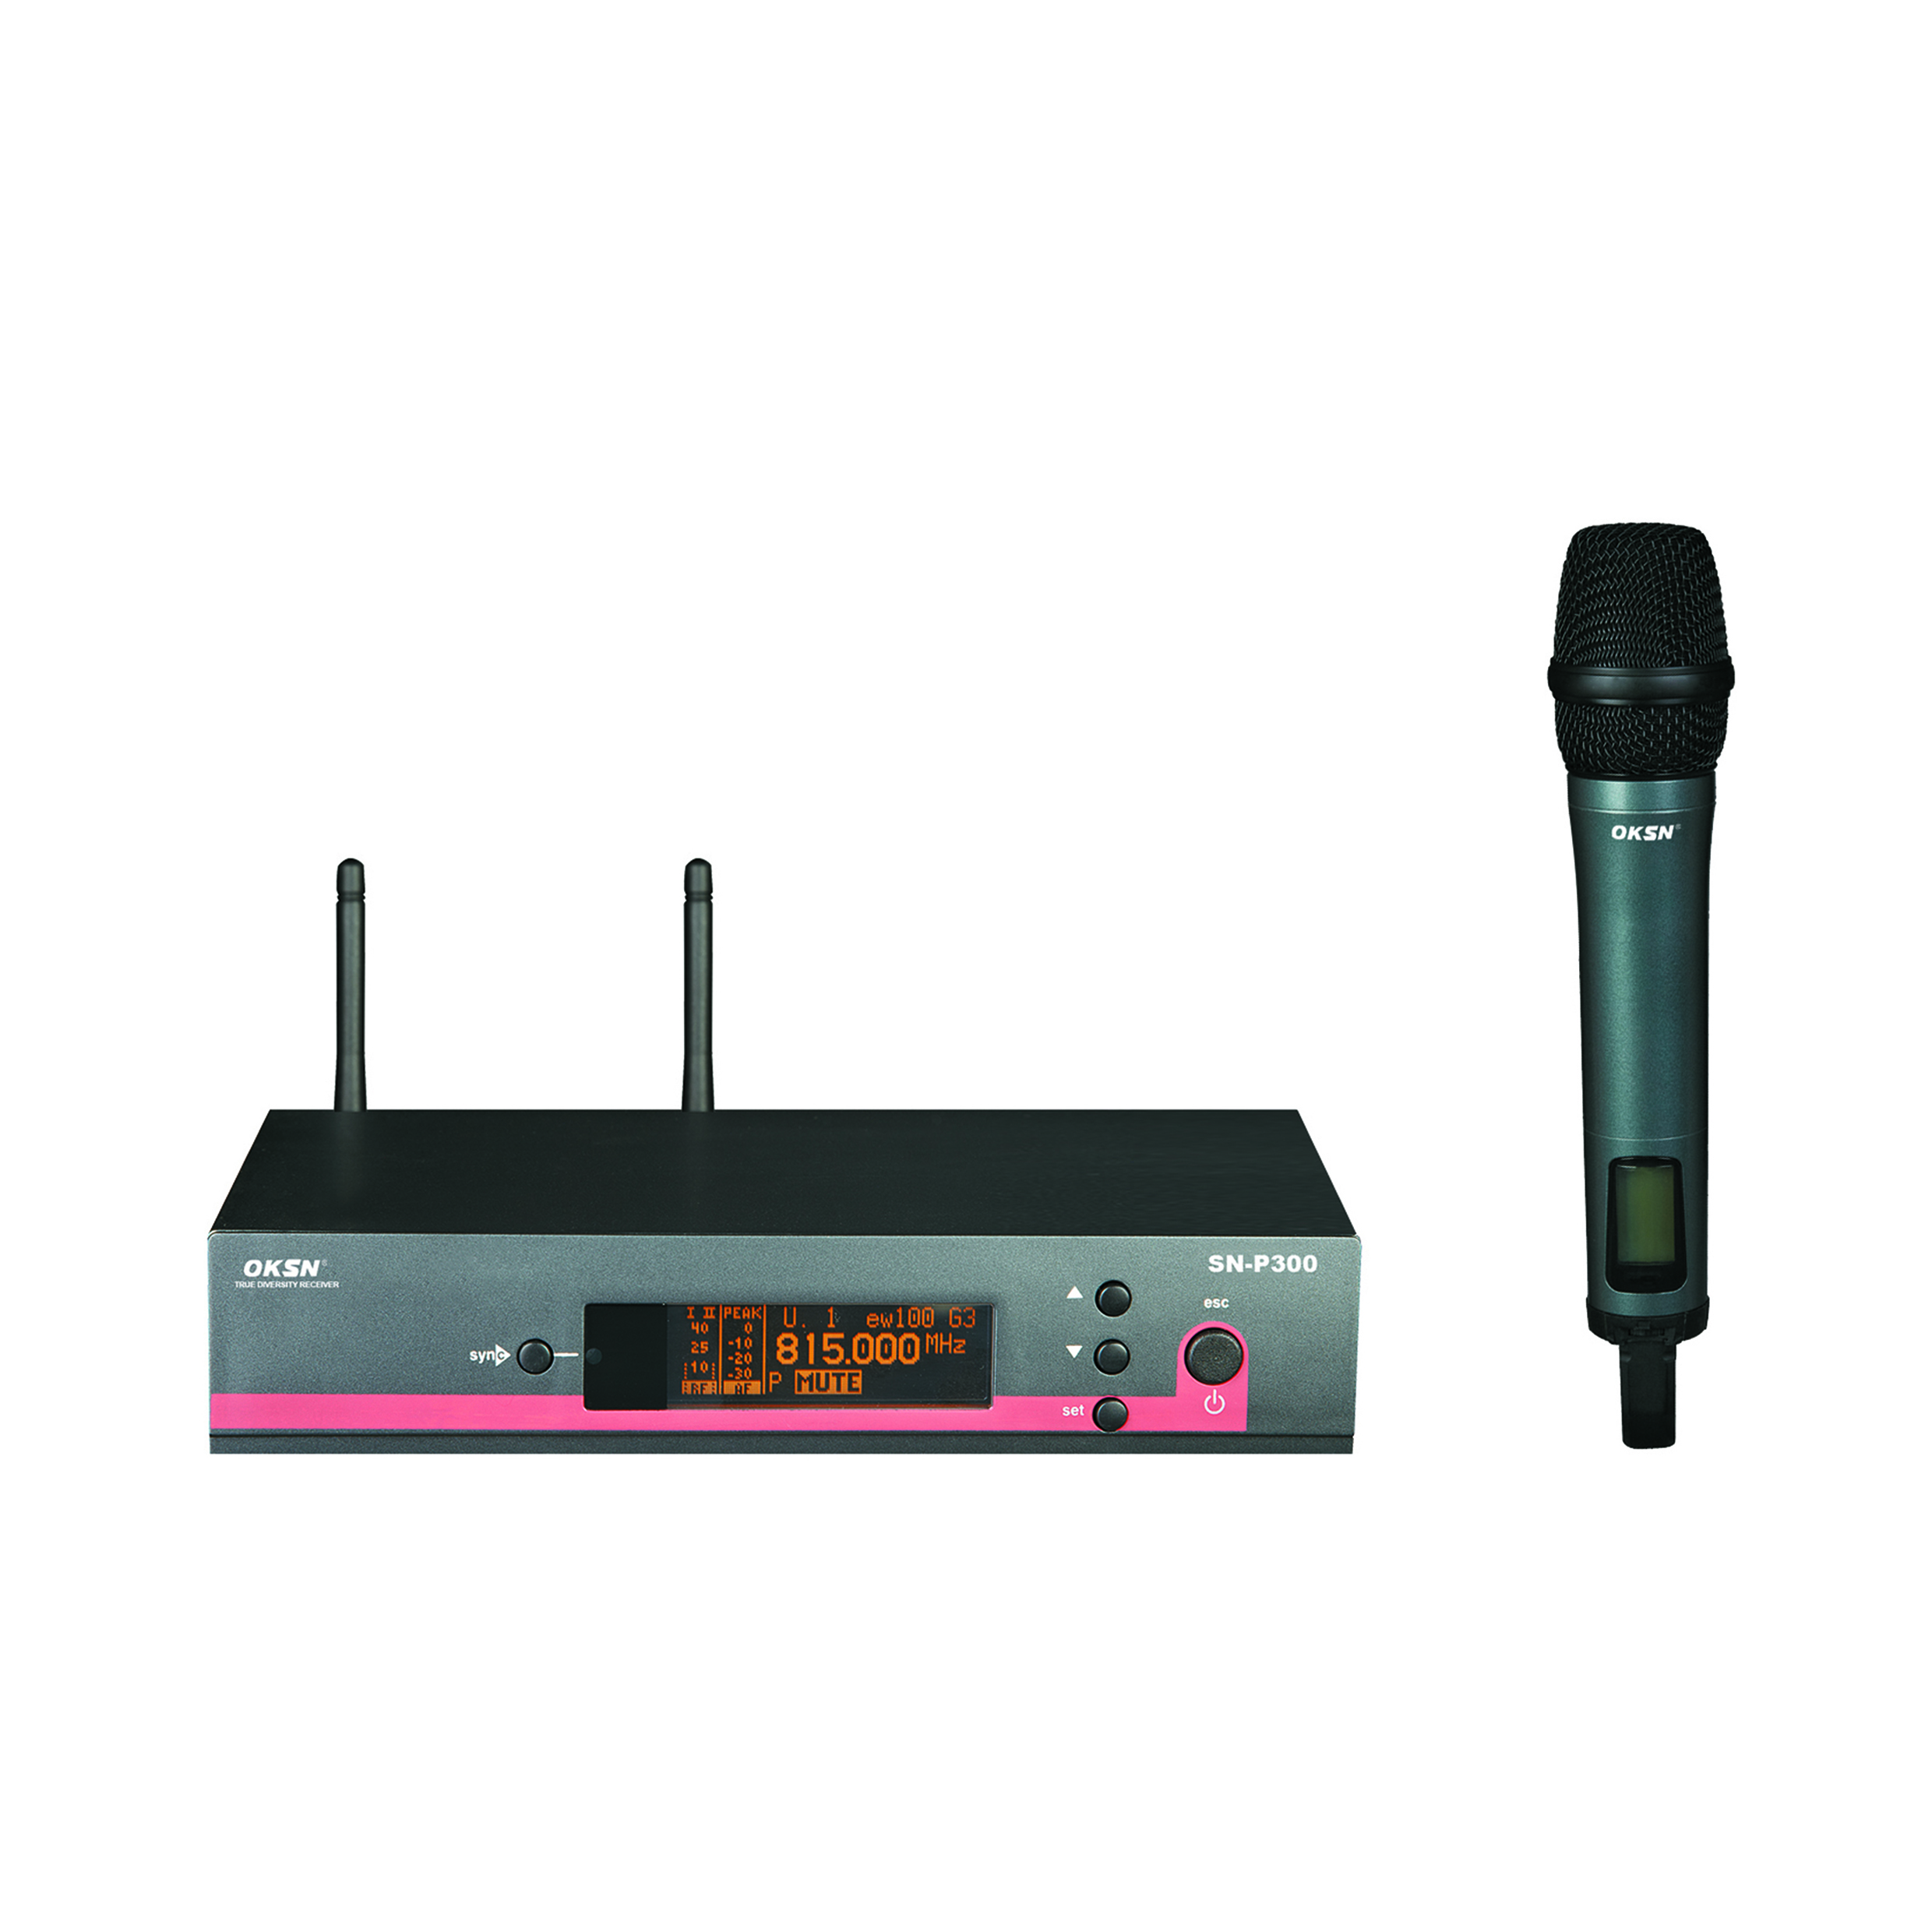 The Evolution of Sound: UHF Wireless Microphones vs. Wireless Microphones vs. Wired Microphones